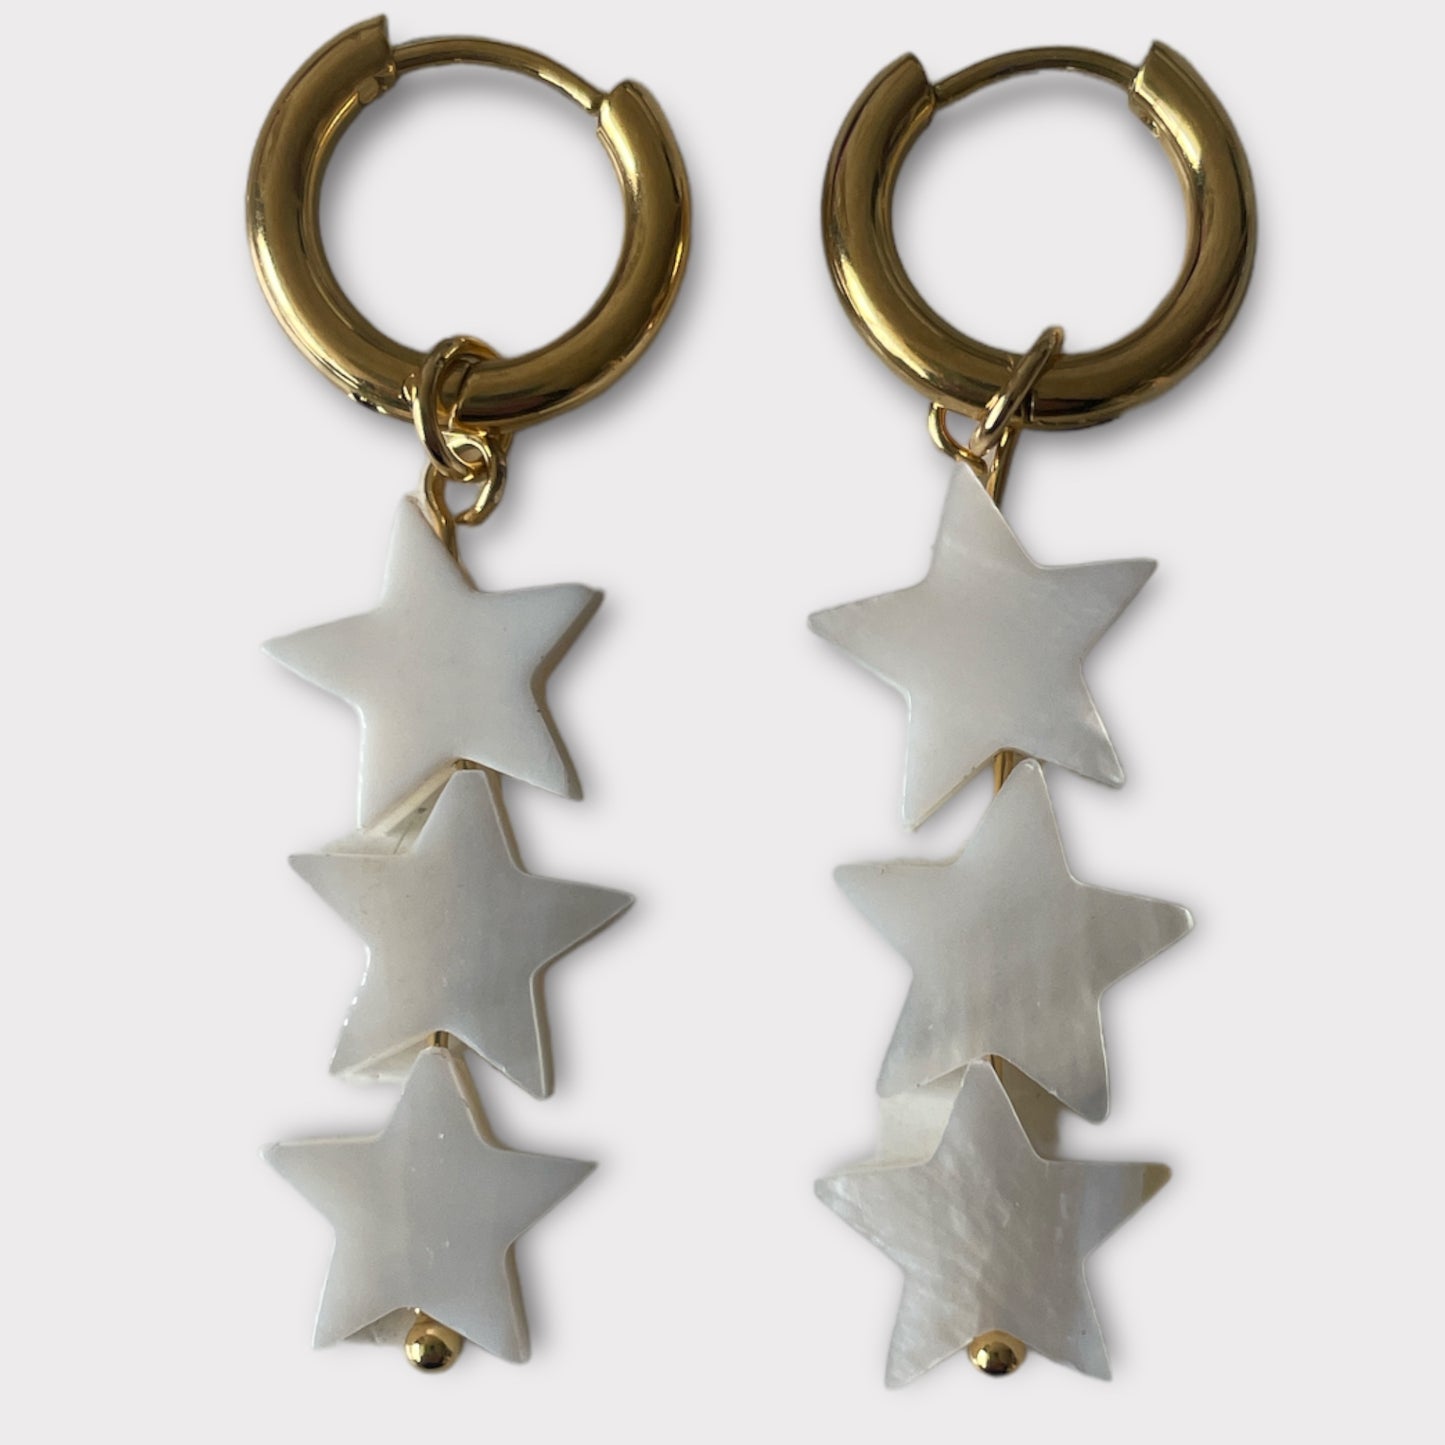 ‘ICONIC STAR’ earrings